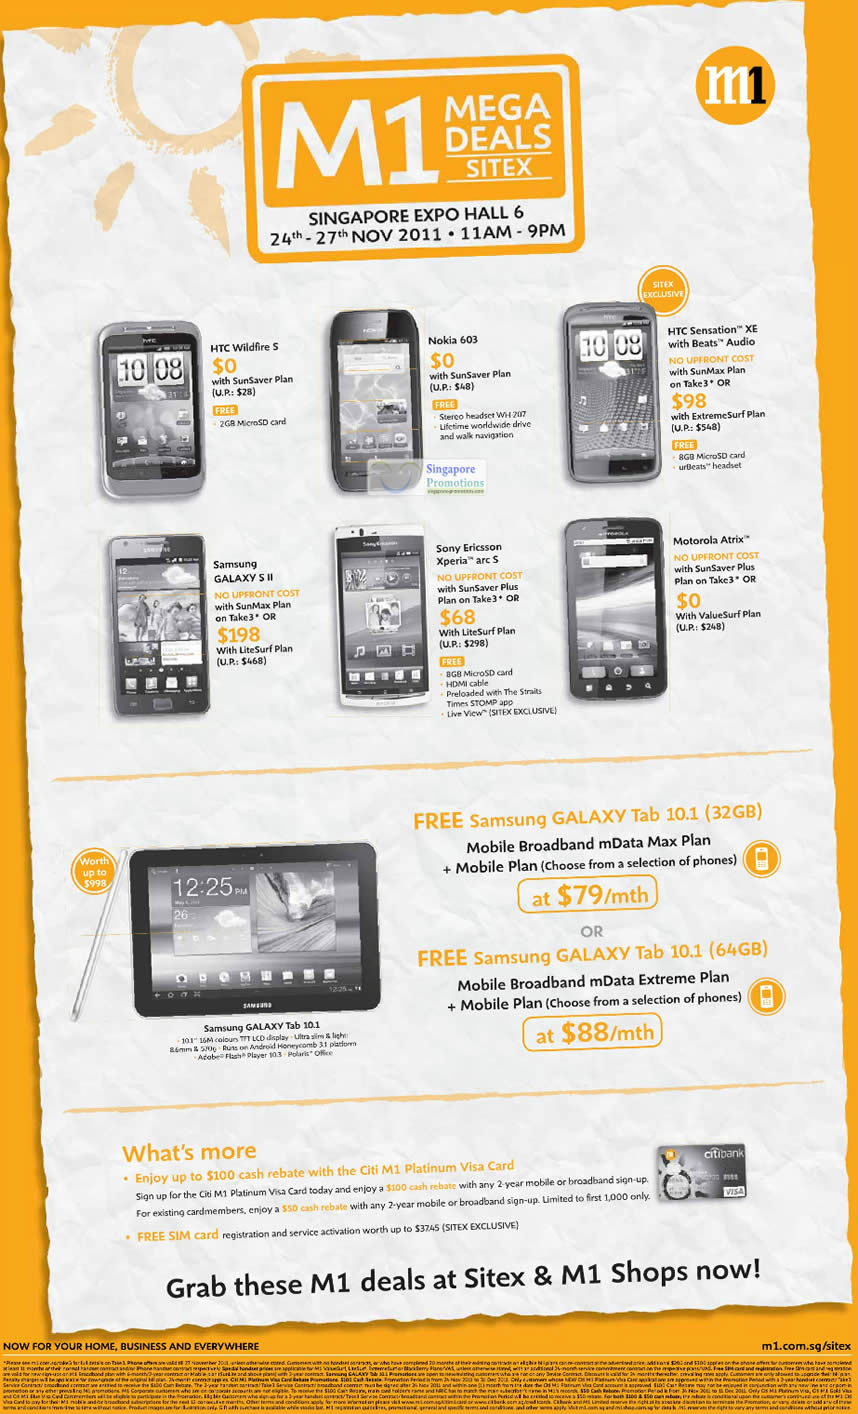 Featured image for M1 Smartphones, Tablets & Home/Mobile Broadband Offers 26 Nov - 2 Dec 2011